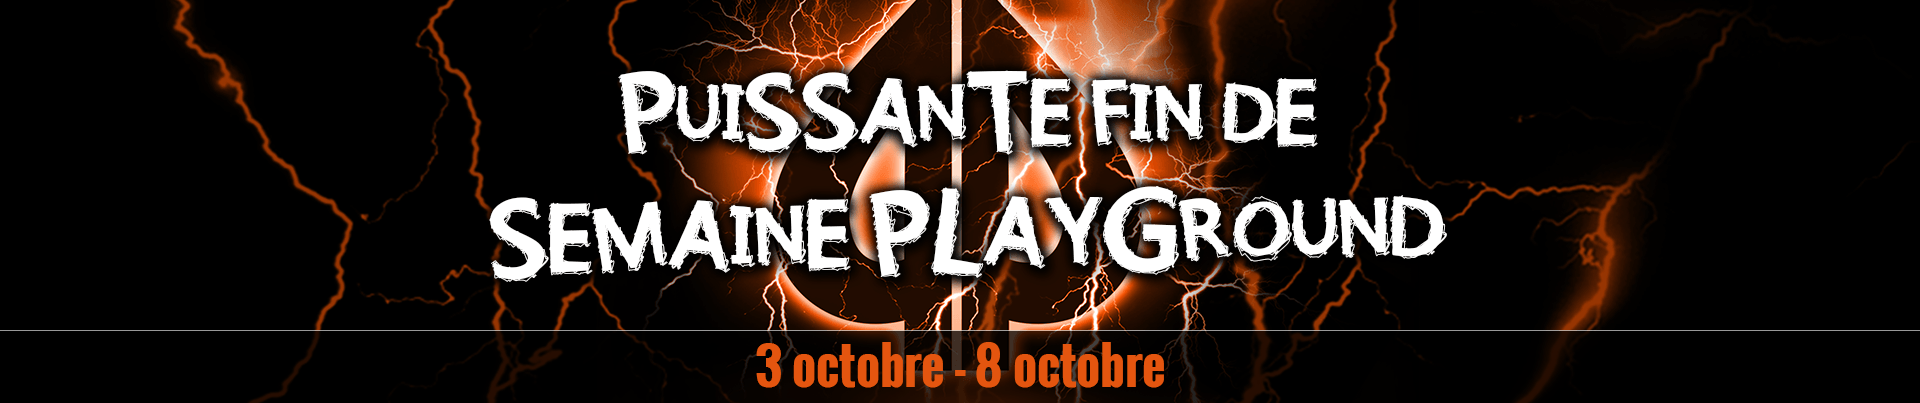 Puissante Fin De Semaine Playground Octobre 2018